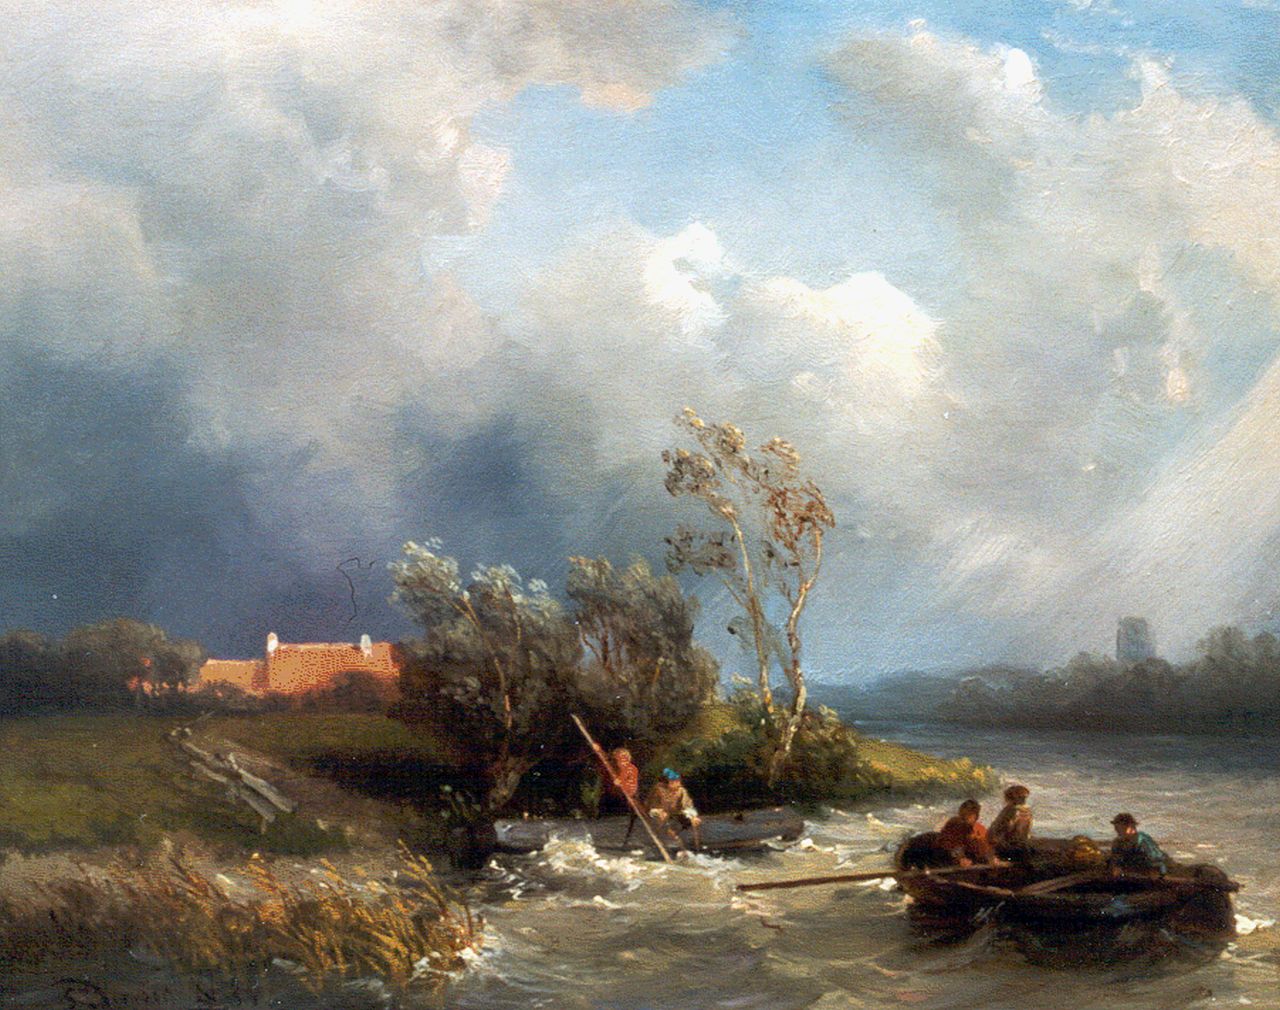 Verveer S.L.  | 'Salomon' Leonardus Verveer, Fishermen in a barge on a choppy river, oil on panel 19.8 x 24.7 cm, signed l.l. and dated '53